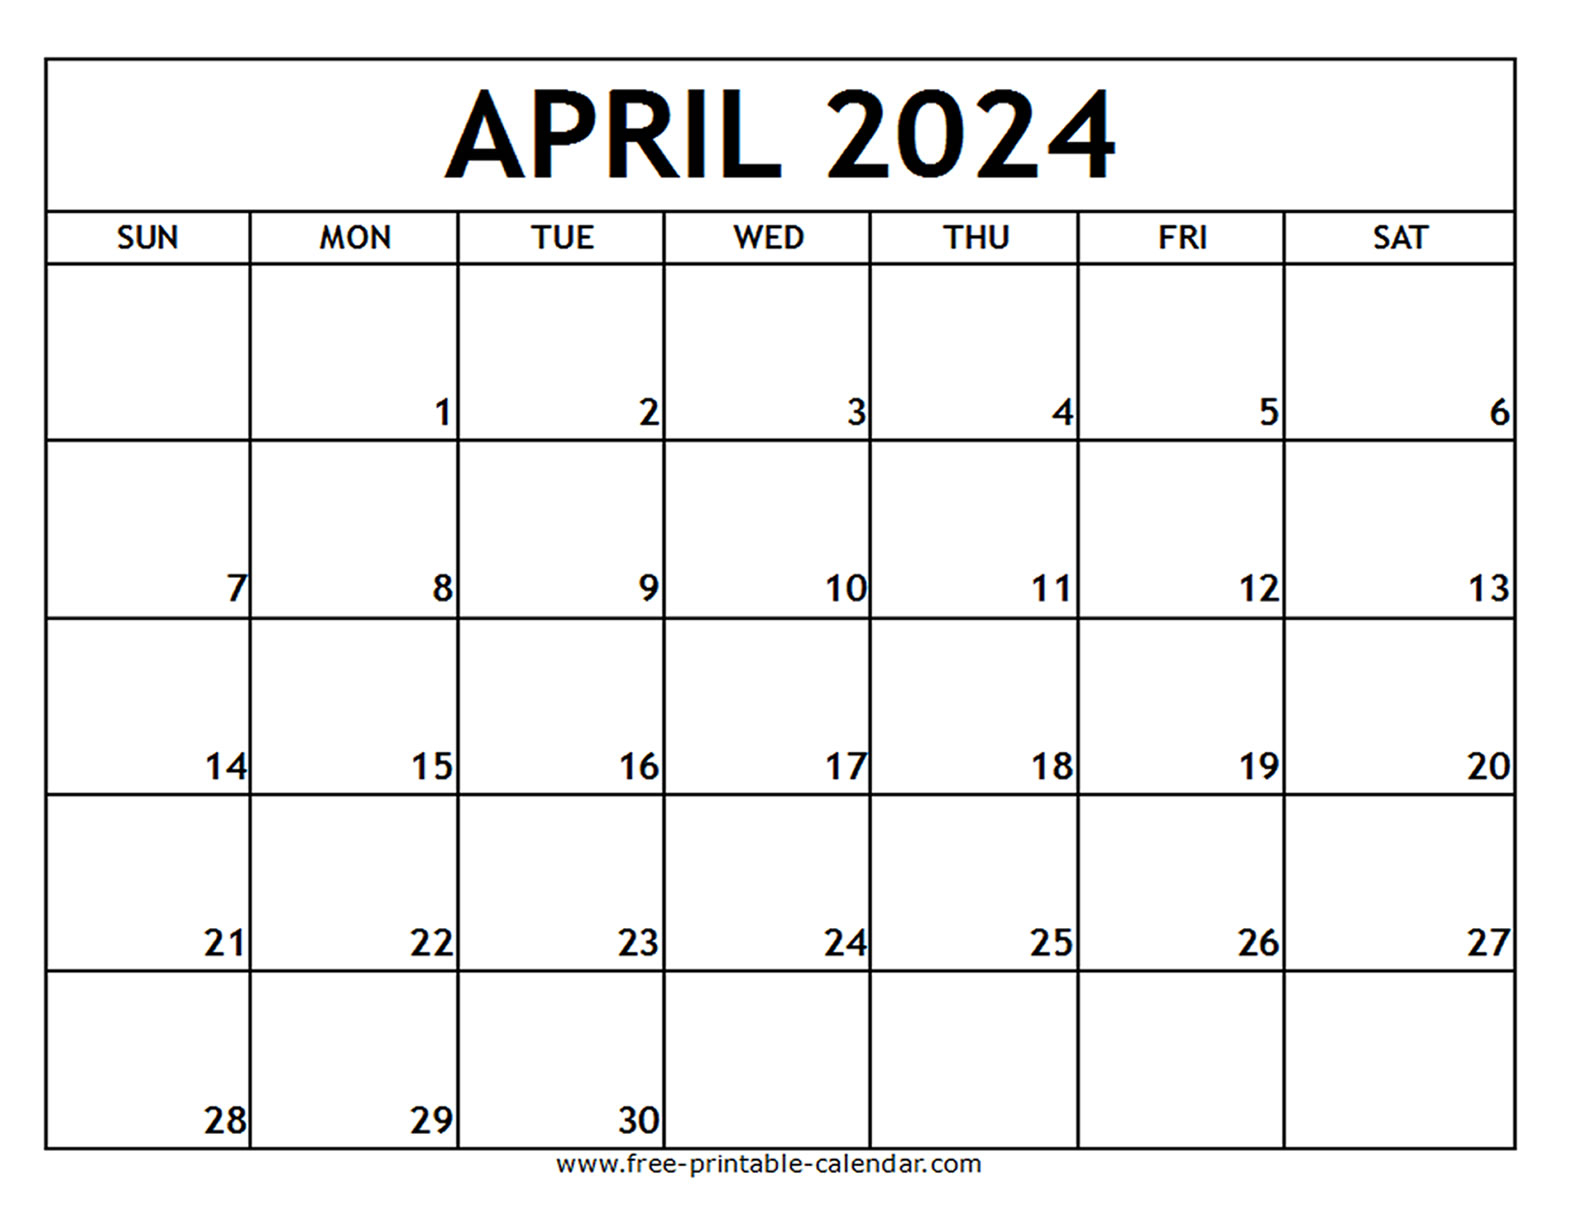 April 2024 Printable Calendar - Free-Printable-Calendar intended for Free Editable April 2024 Calendar